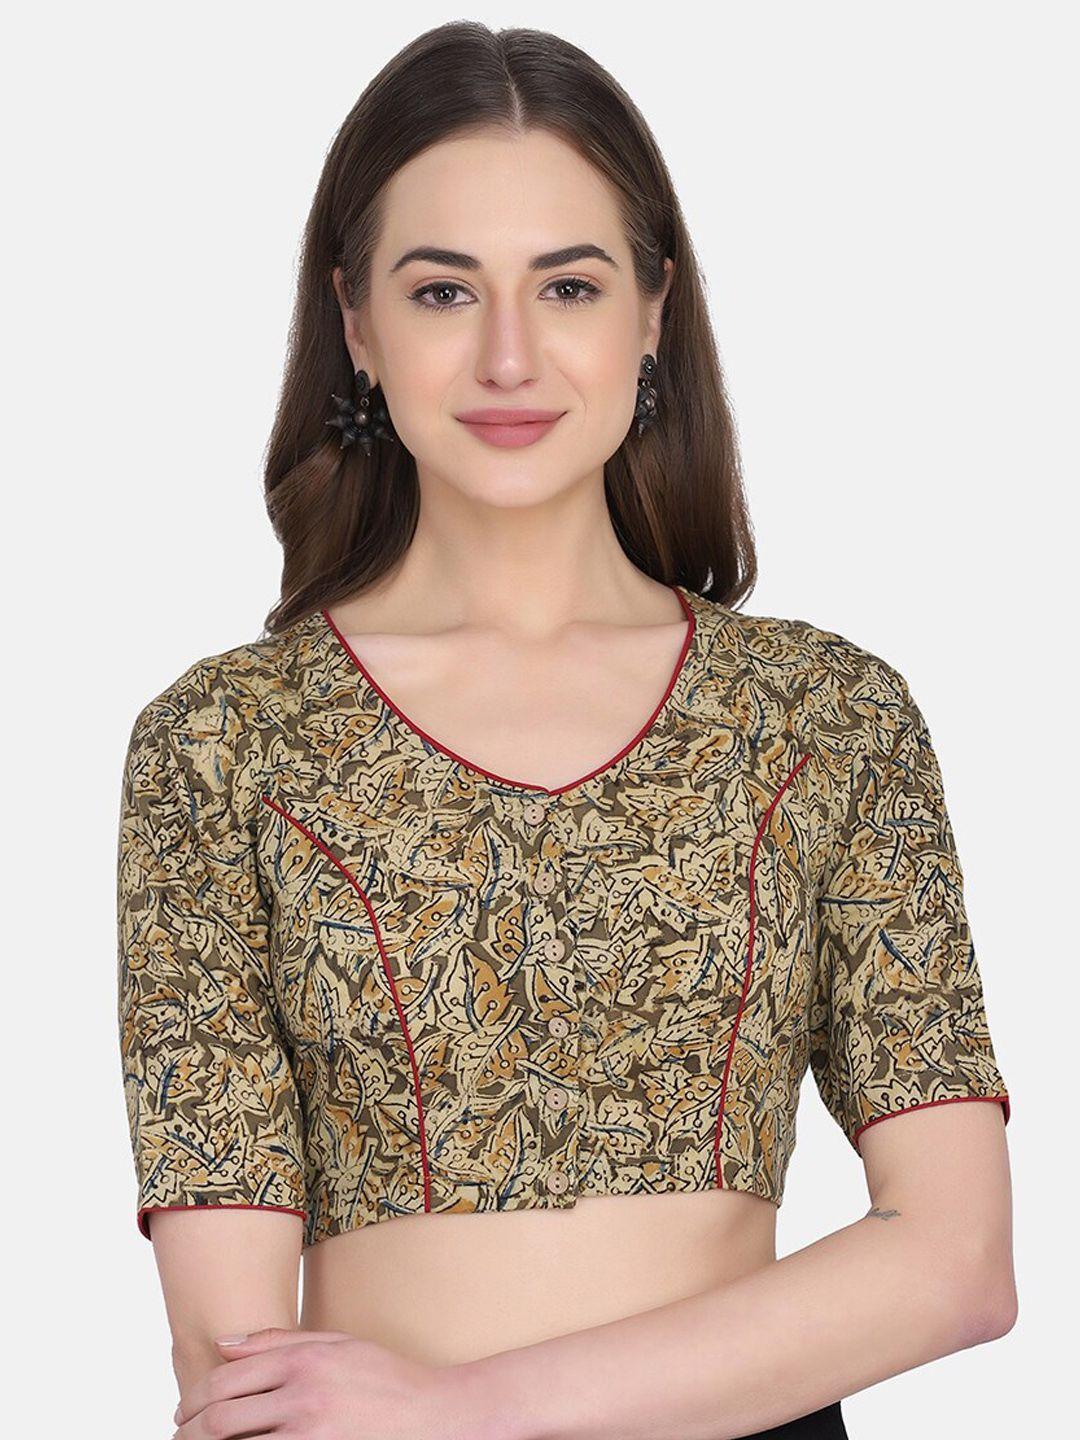 the-weave-traveller-women-brown-kalamkari-printed-cotton-non-padded-readymade-saree-blouse